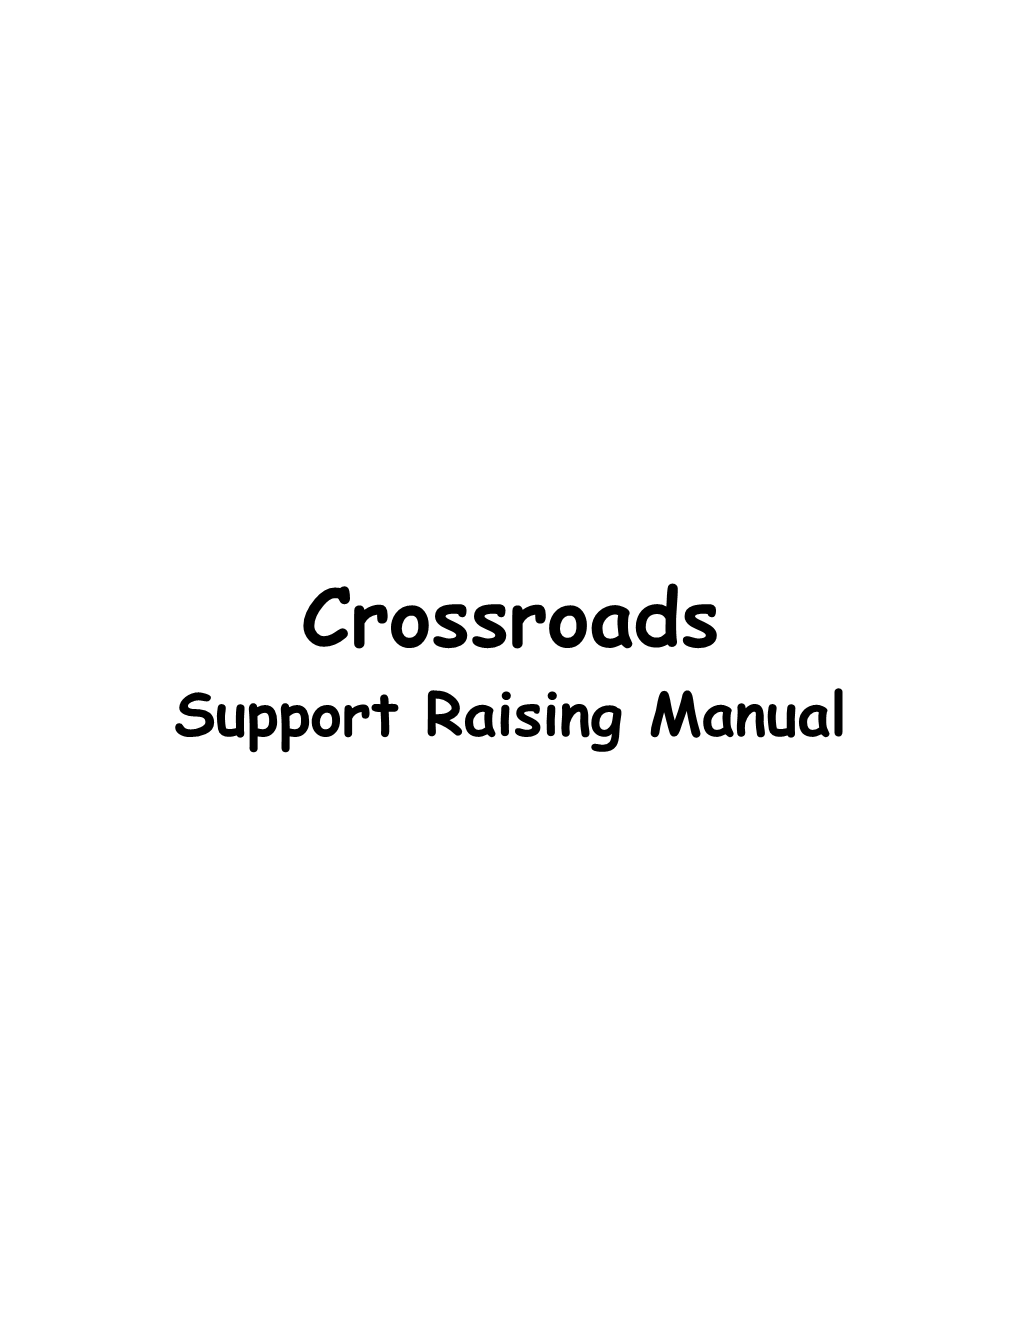 Support Raising Manual